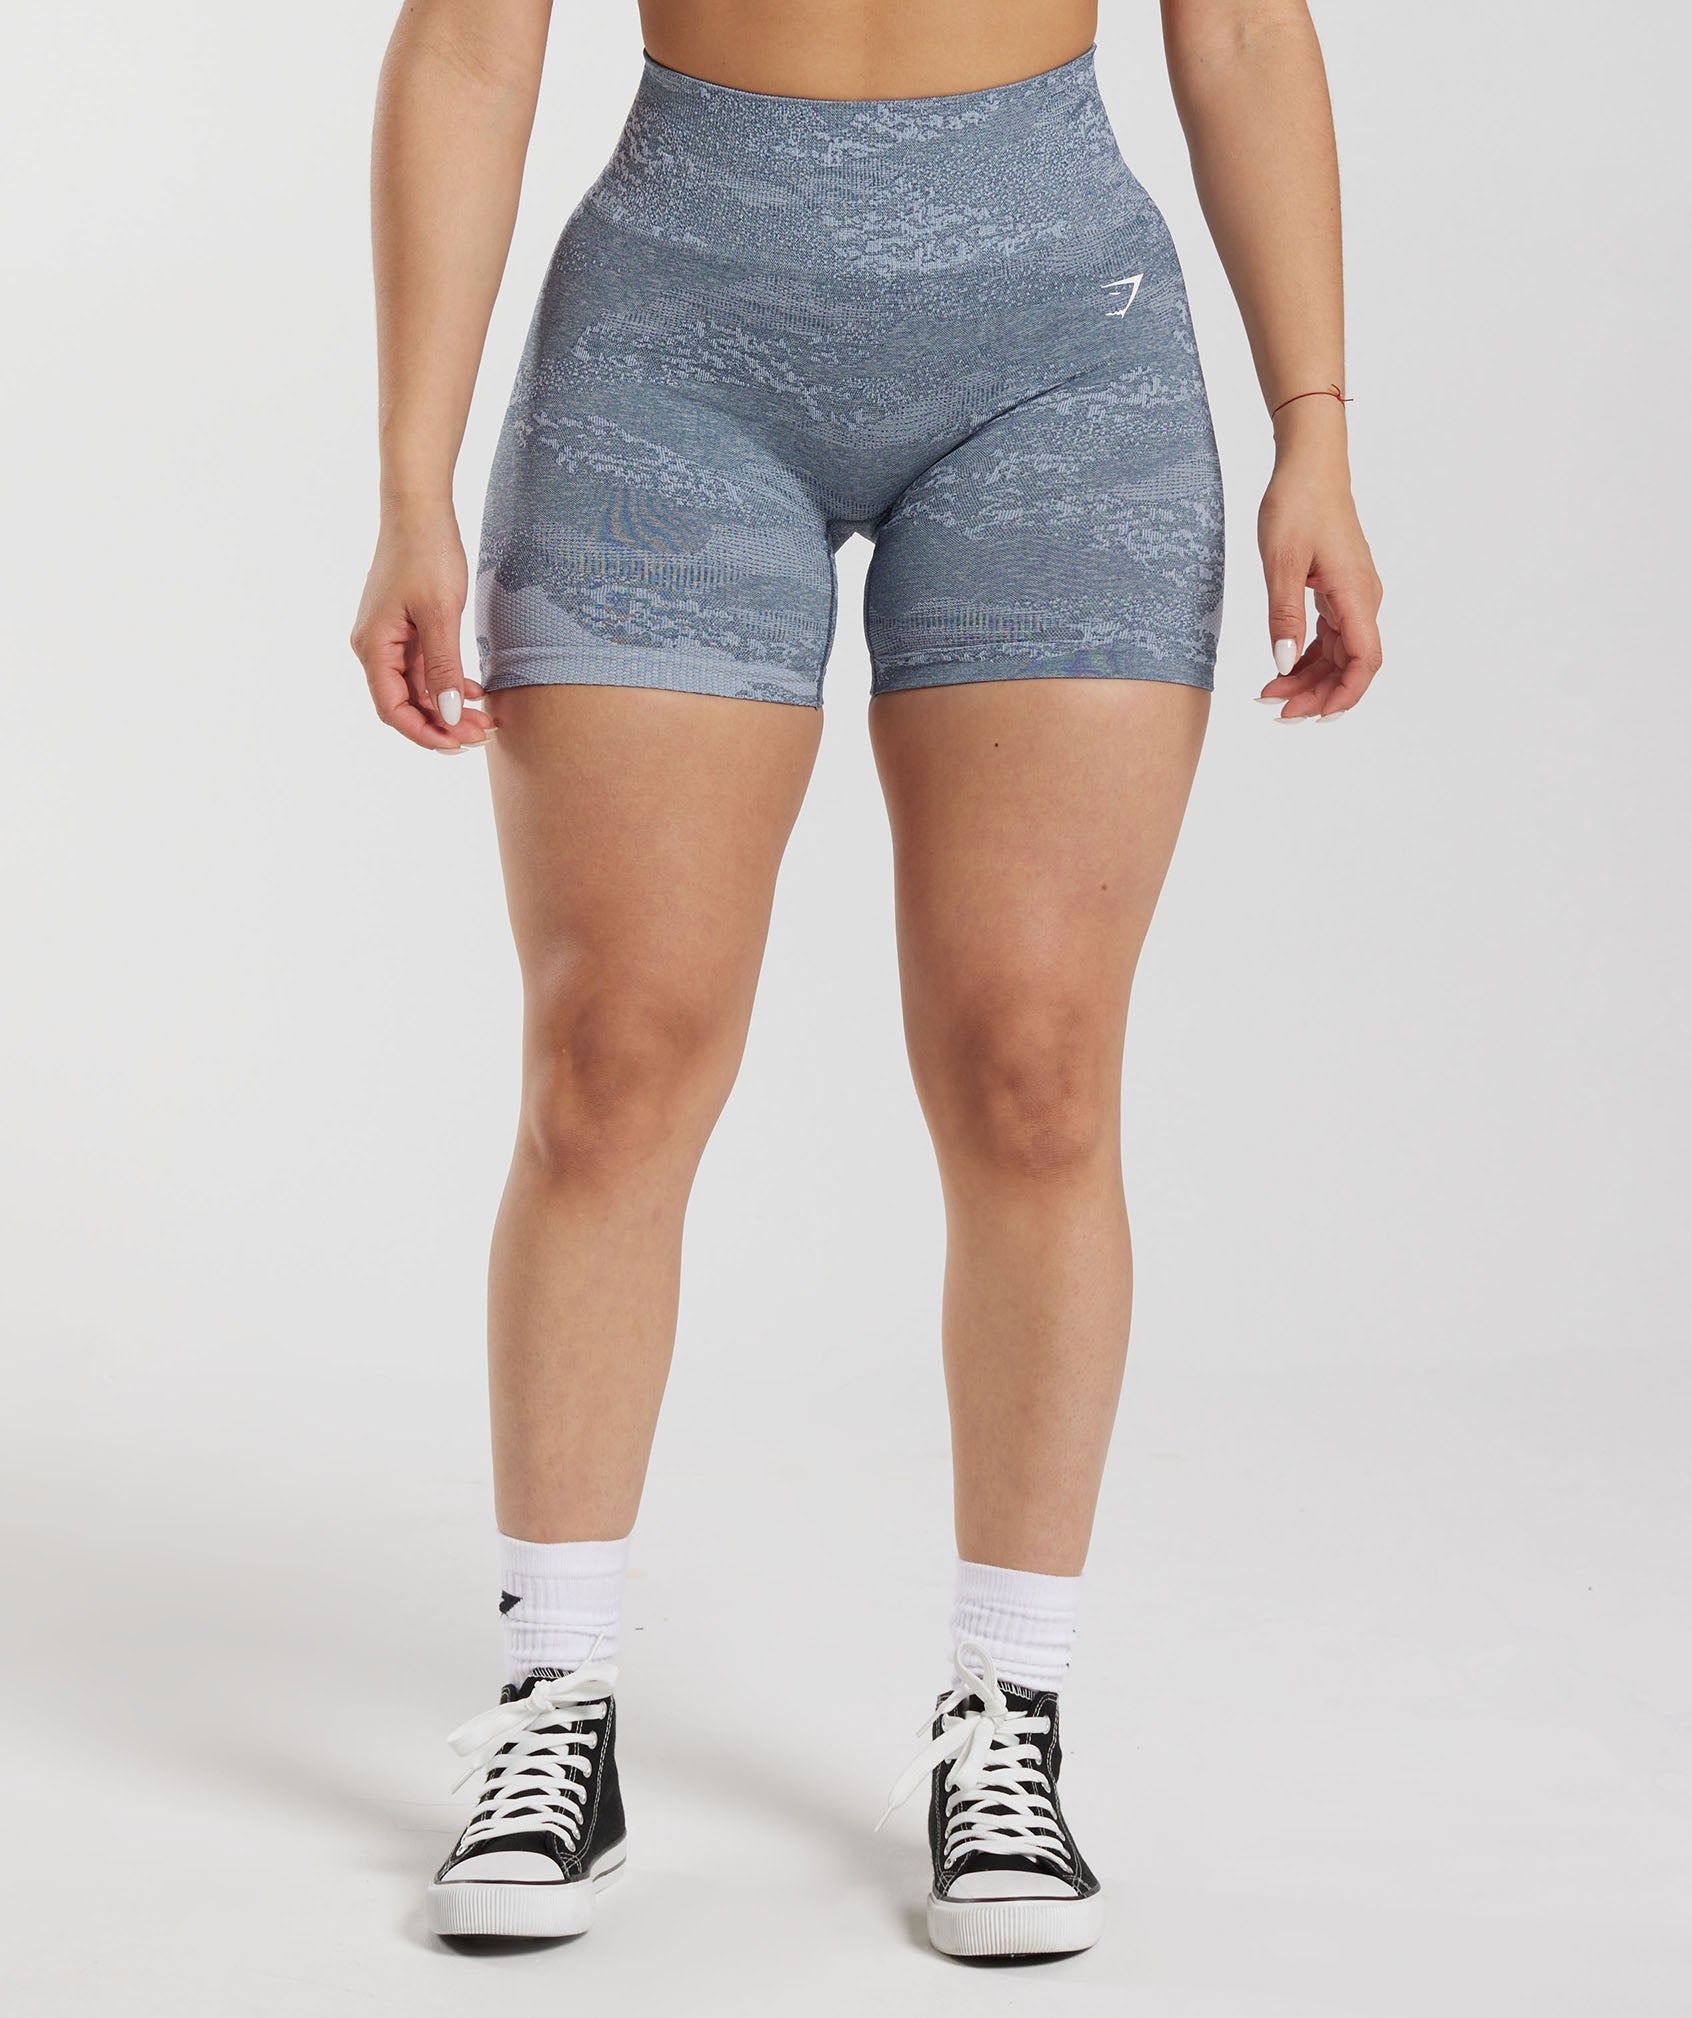 Women's Grey Gym Shorts & Workout Shorts - Gymshark